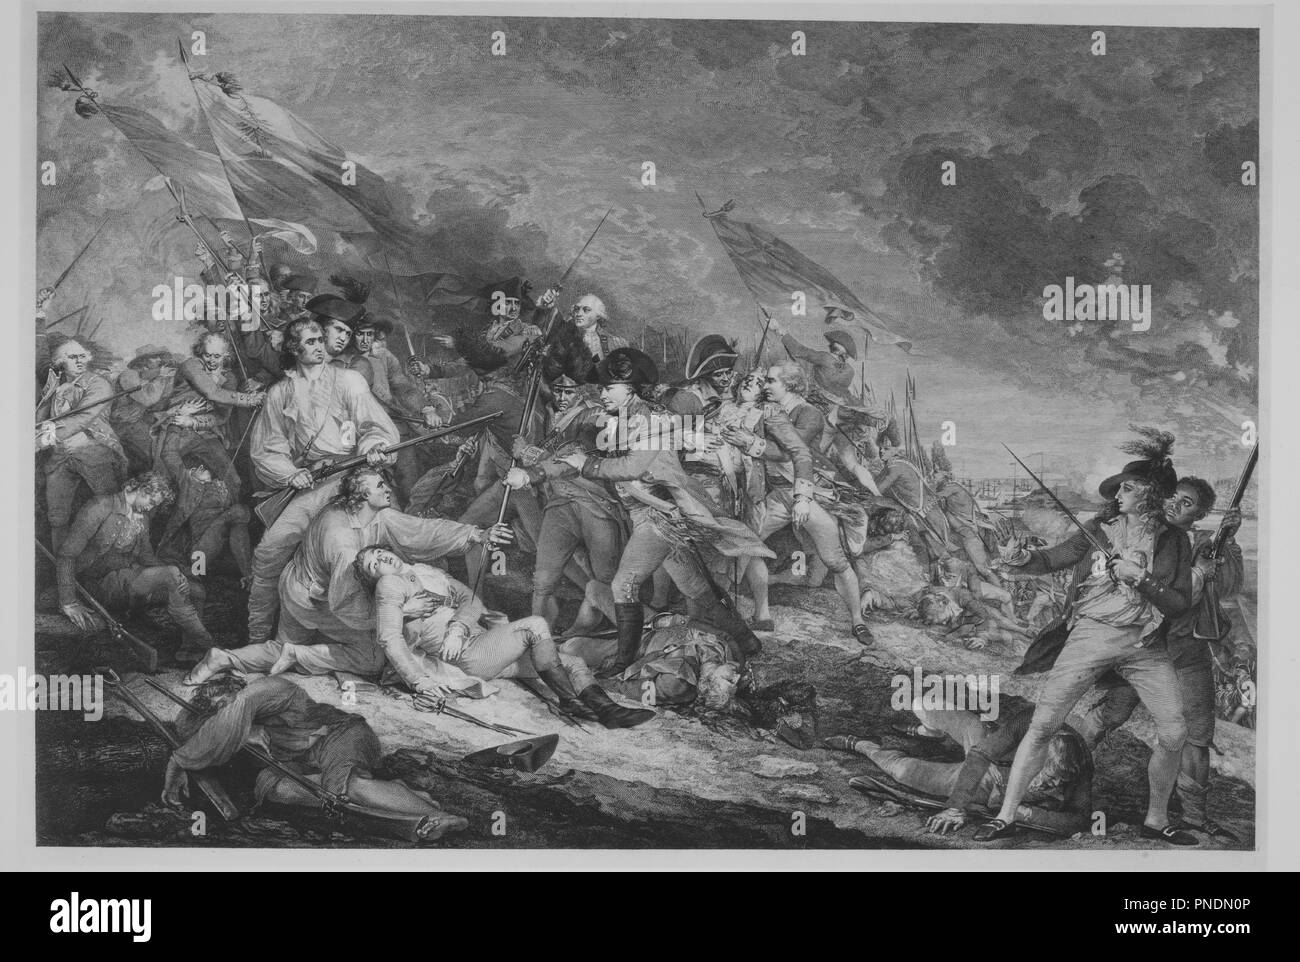 Battle of Bunker Hill (June 17, 1775). Artist: After John Trumbull (American, Lebanon, Connecticut 1756-1843 New York); Johann Gotthard Muller (German, Bernausen 1747-1830 Stuttgart). Dimensions: image: 19 13/16 x 29 5/8 in. (50.3 x 75.2 cm)  plate: 23 3/8 x 32 5/8 in. (59.4 x 82.9 cm)  sheet: 23 3/8 x 34 in. (59.4 x 86.4 cm). Publisher: Published London by Antonio Cesare Poggi (Italian, active London and Paris, 1769-?1836). Date: ca. 1798. Museum: Metropolitan Museum of Art, New York, USA. Stock Photo